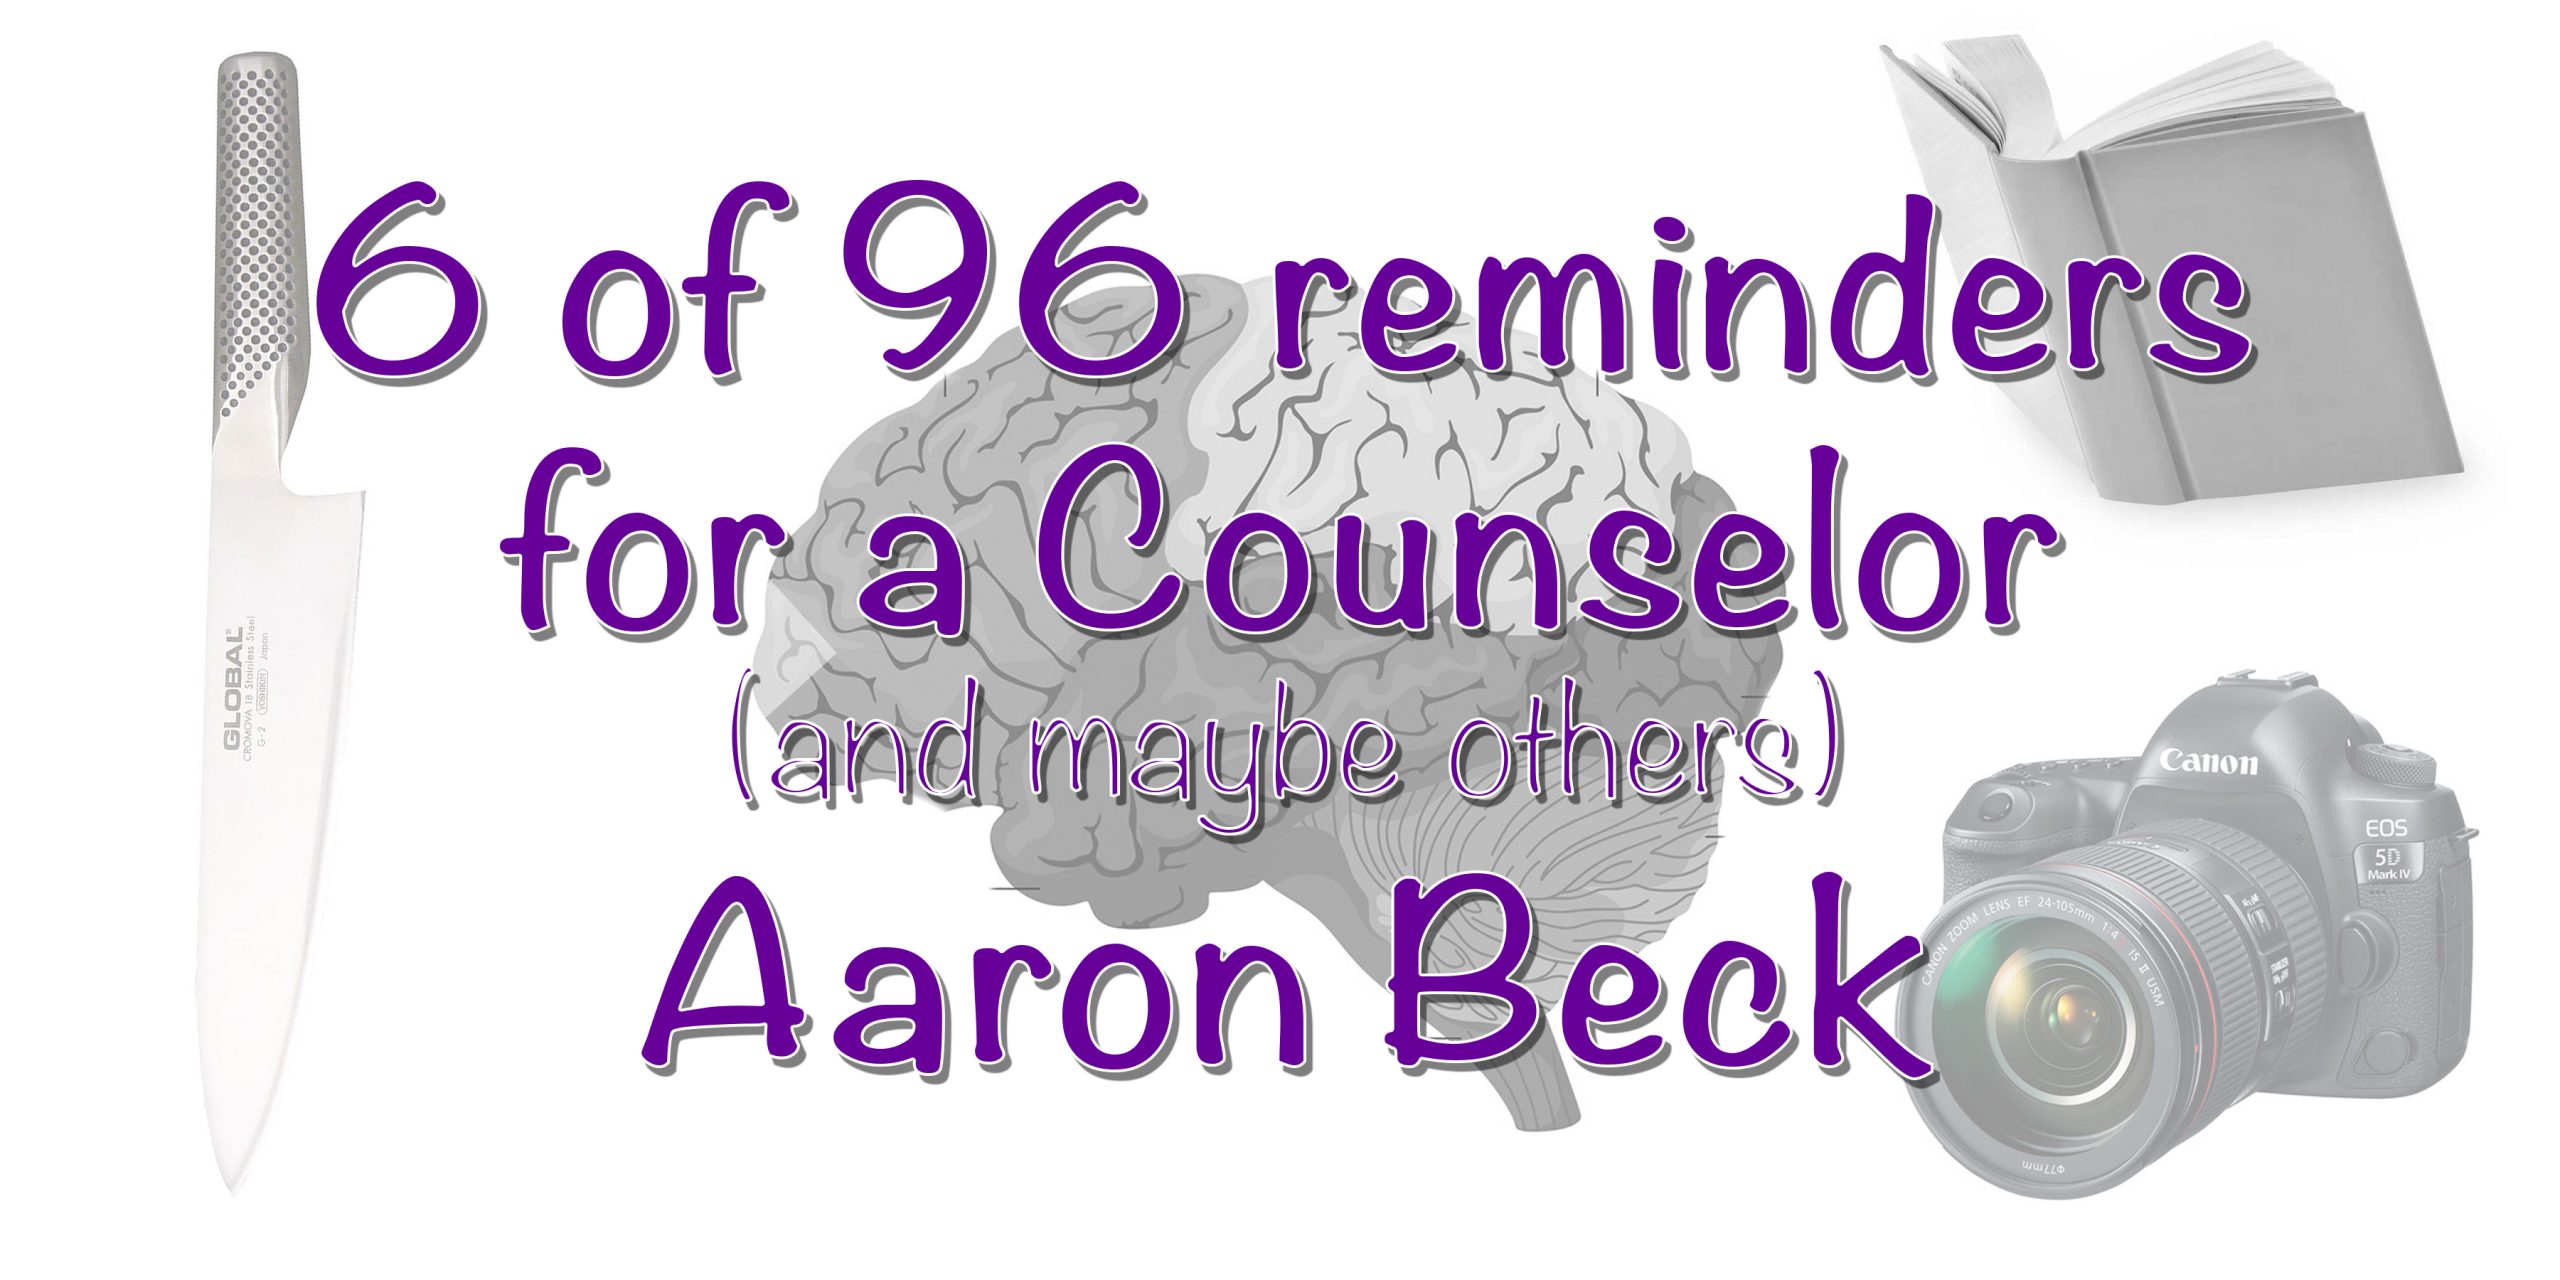 Aaron T. Beck – Reminder 6 of 96